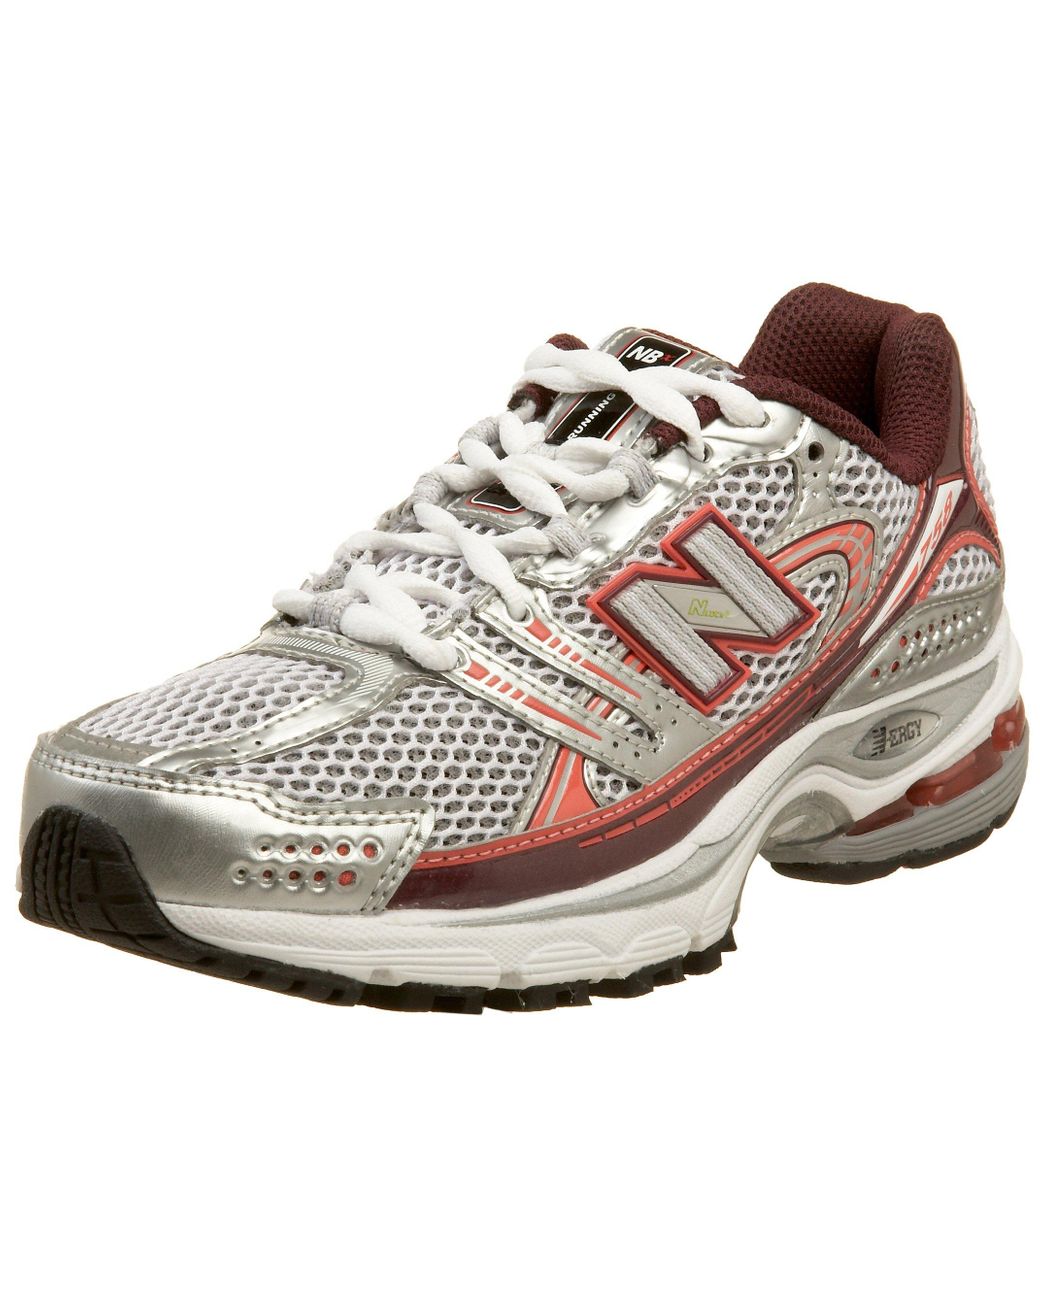 New Balance 758 V1 Running Shoe in Metallic | Lyst